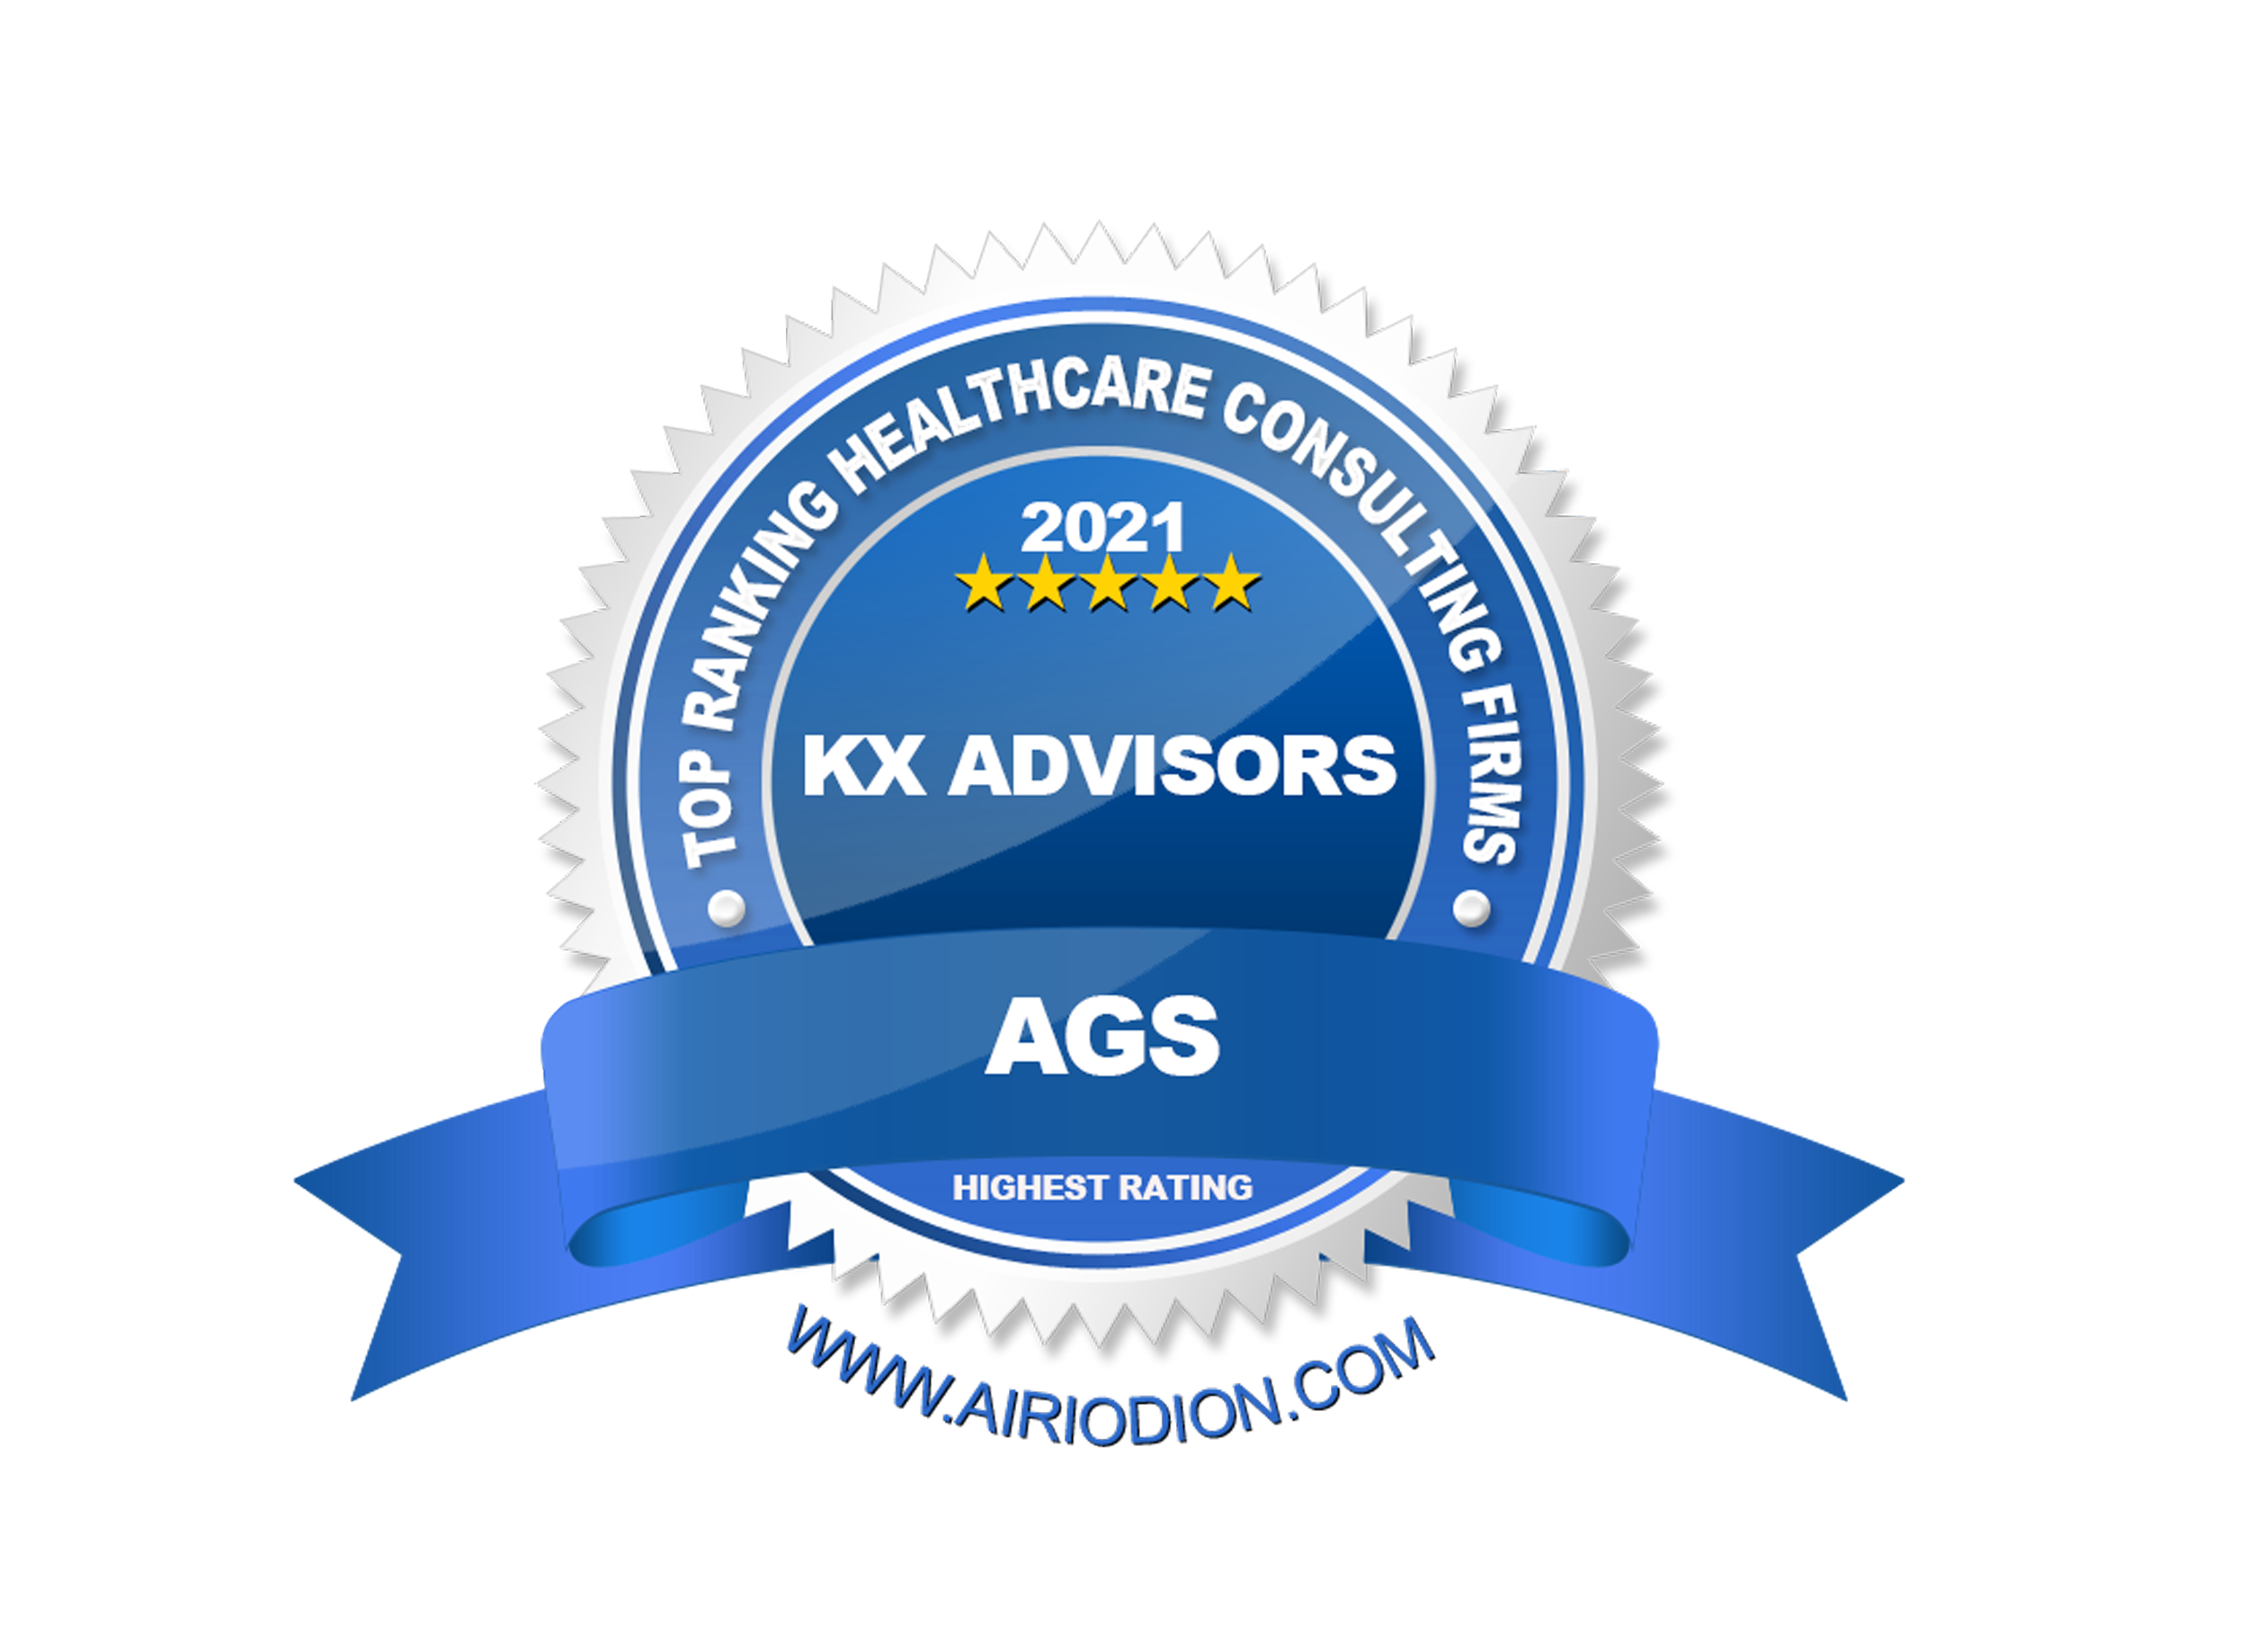 Kx Advisors AGS 2021 Award Blue